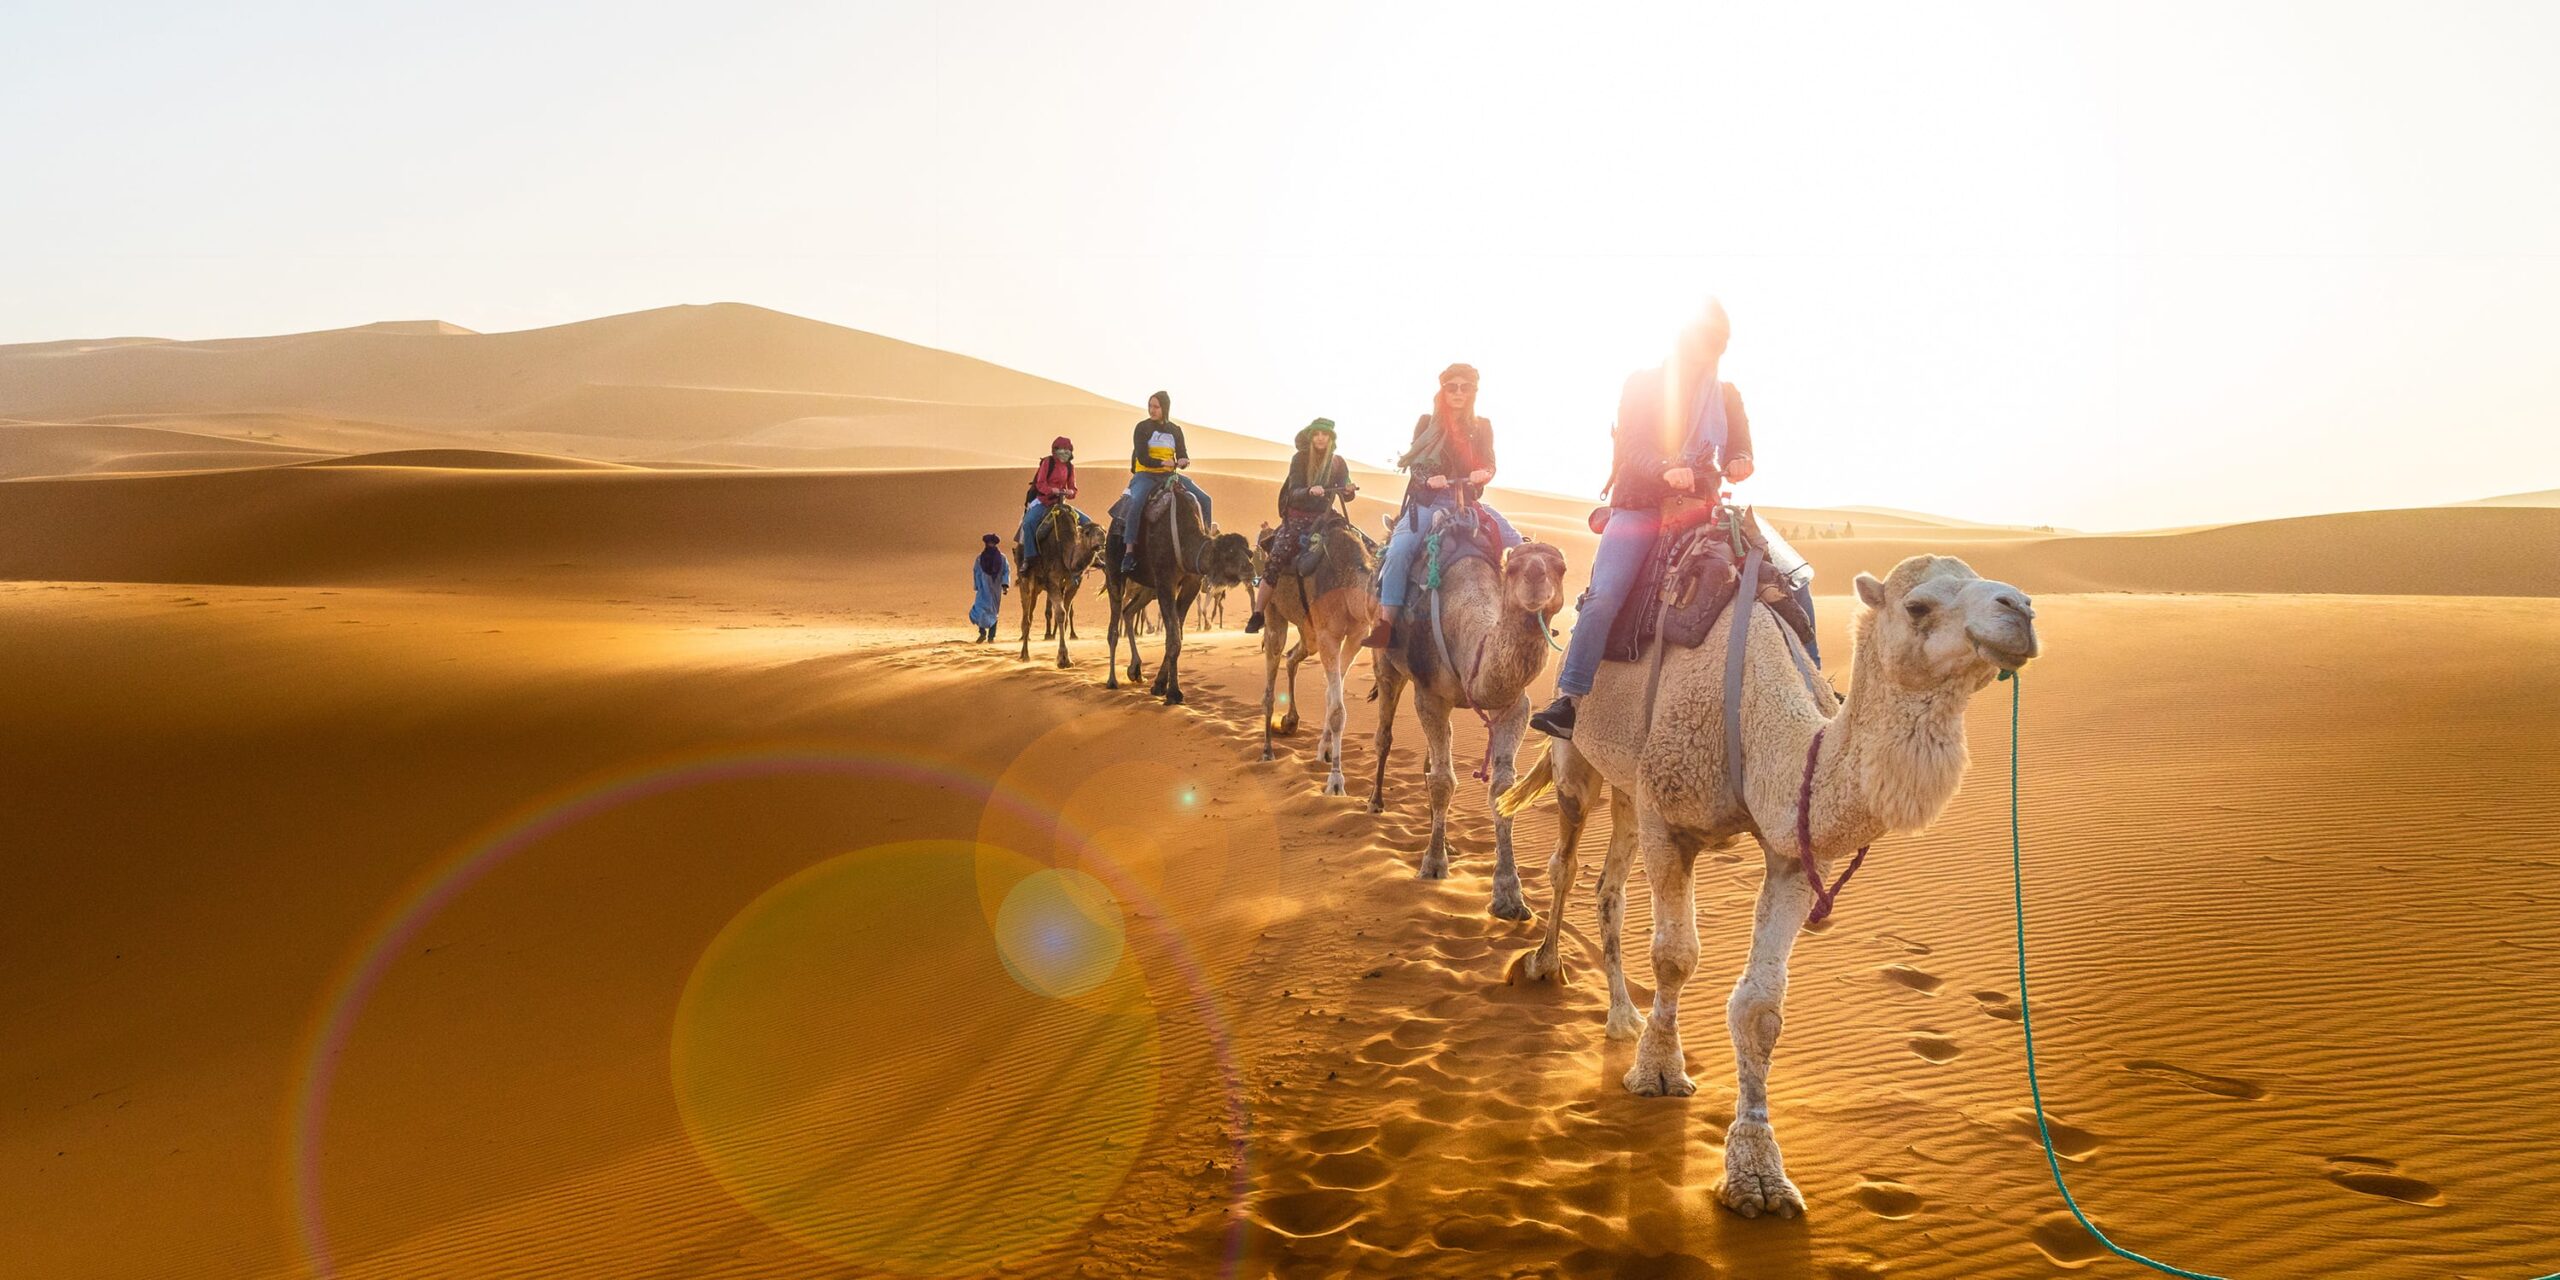 Morocco travel agency